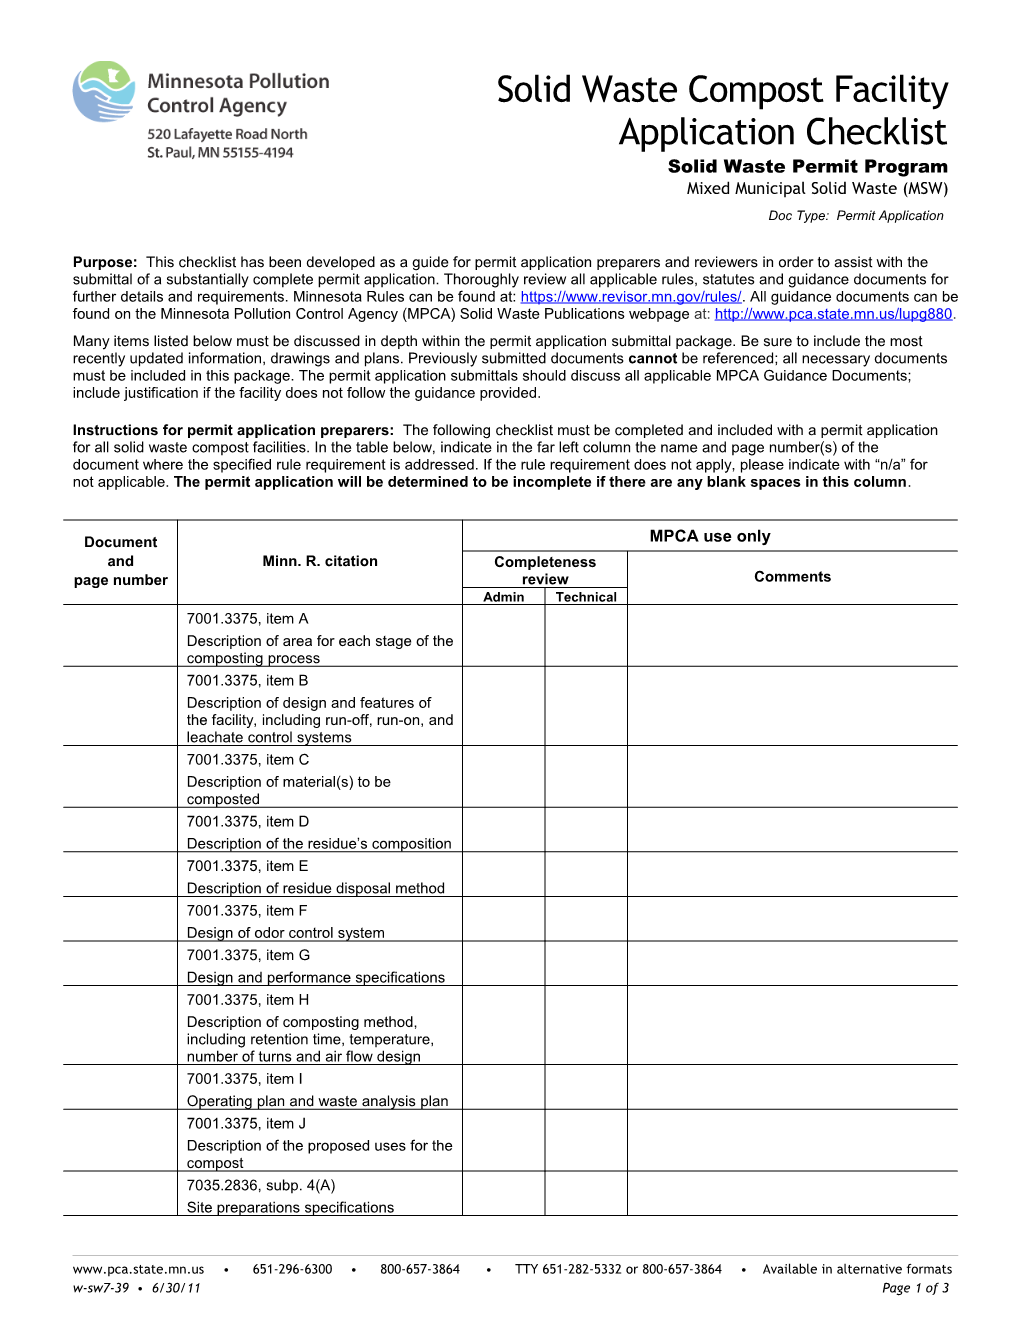 Solid Waste Compost Facilityl Application Checklist - Form